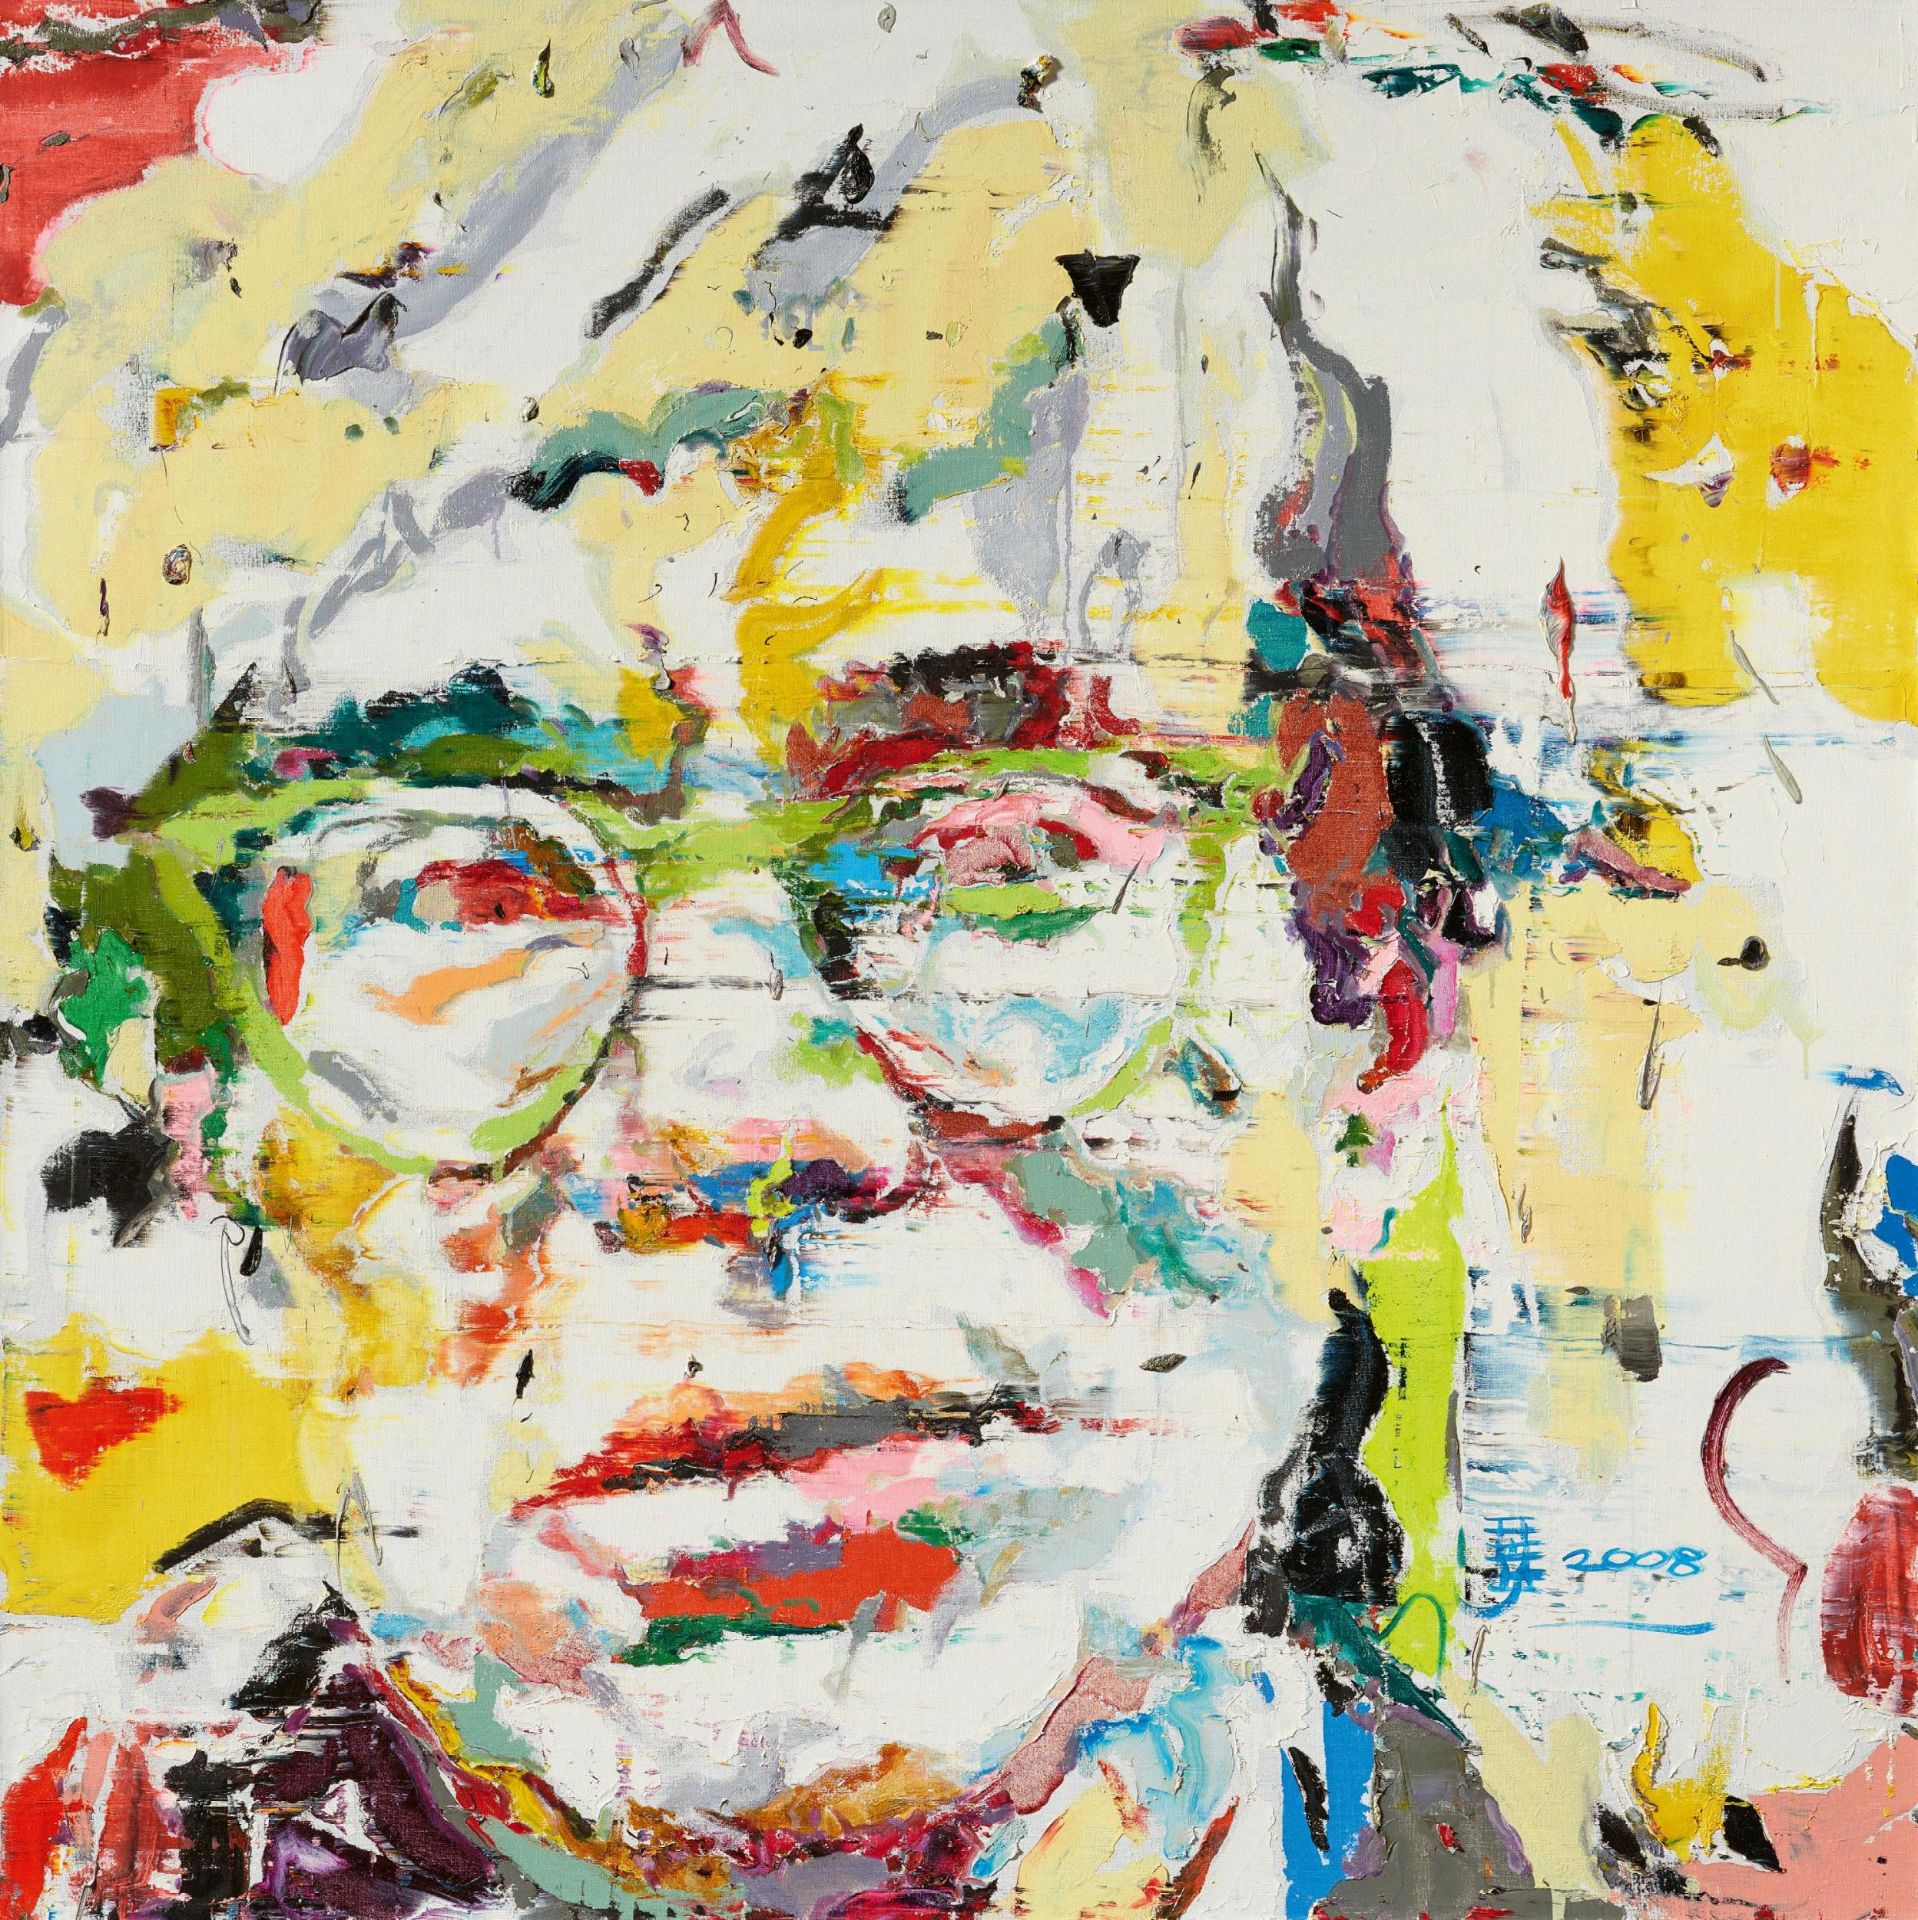 Zhenyu Ren: Andy Warhol